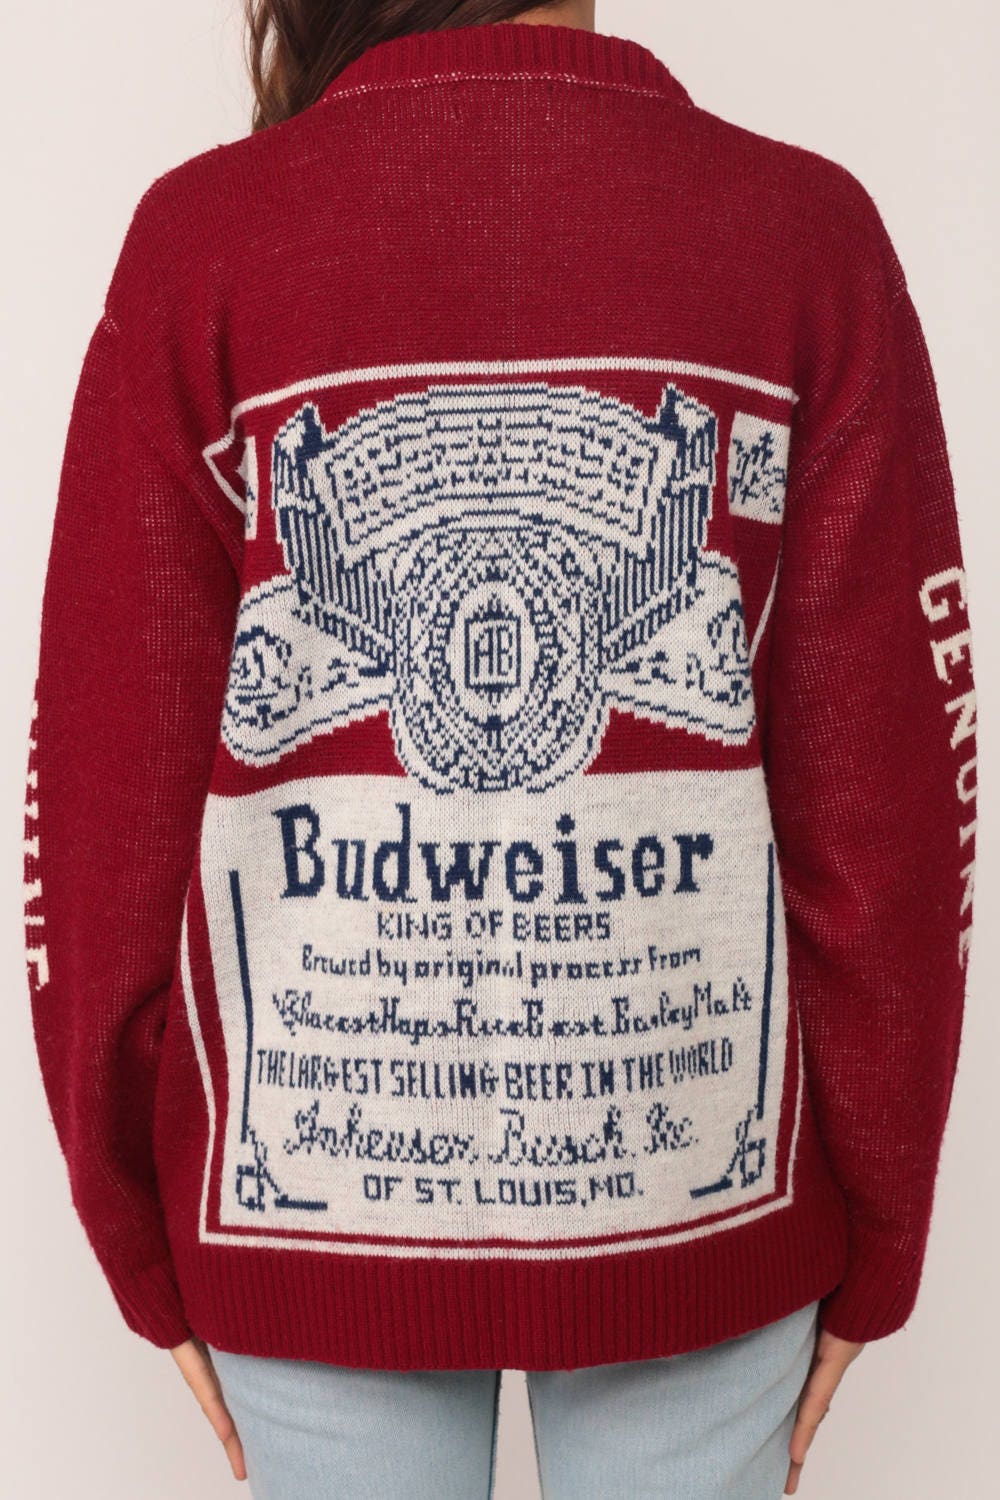 Budweiser Sweater Beer Sweater Drinking Shirt 80s Vintage